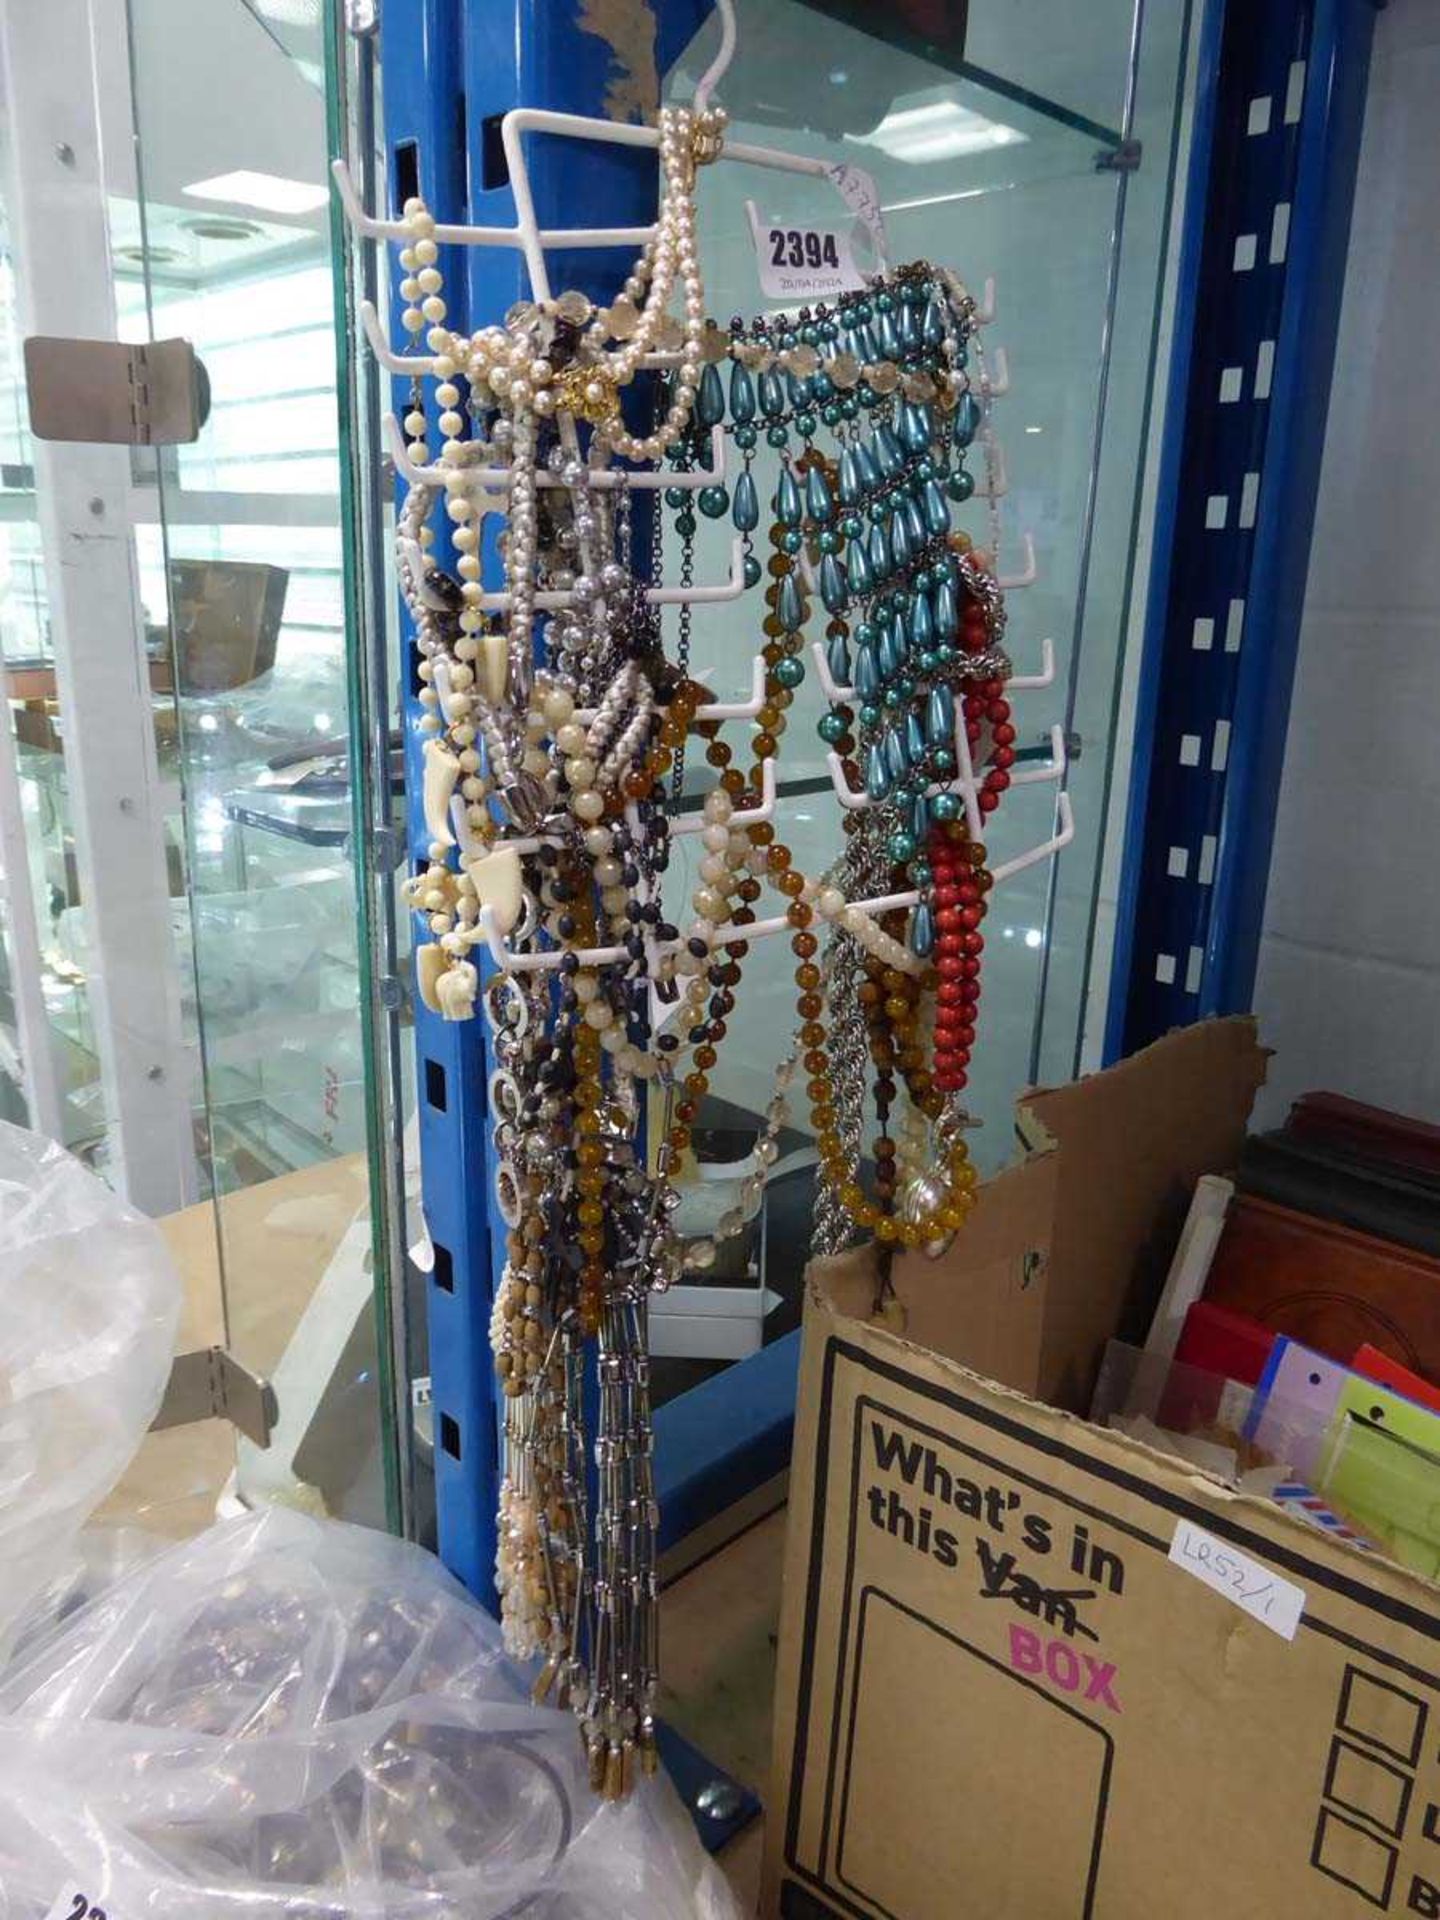 Quantity of necklaces